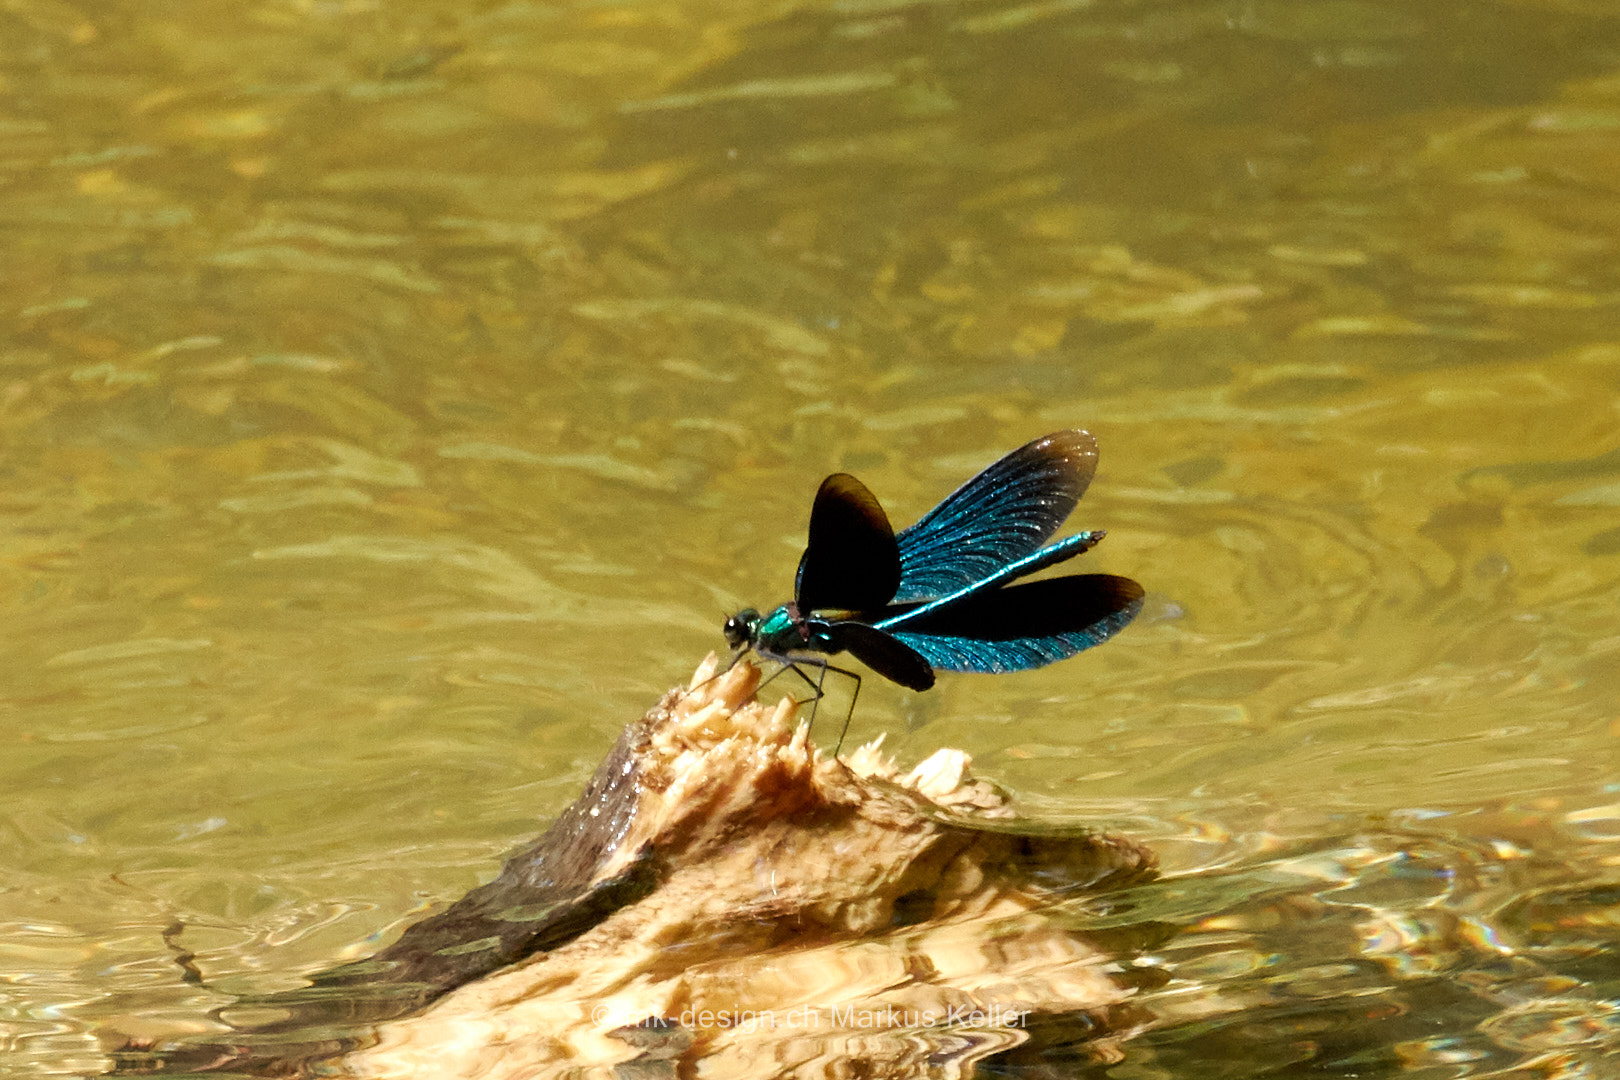 Tier   Insekte   Libelle   Blauflügel Prachtlibelle   